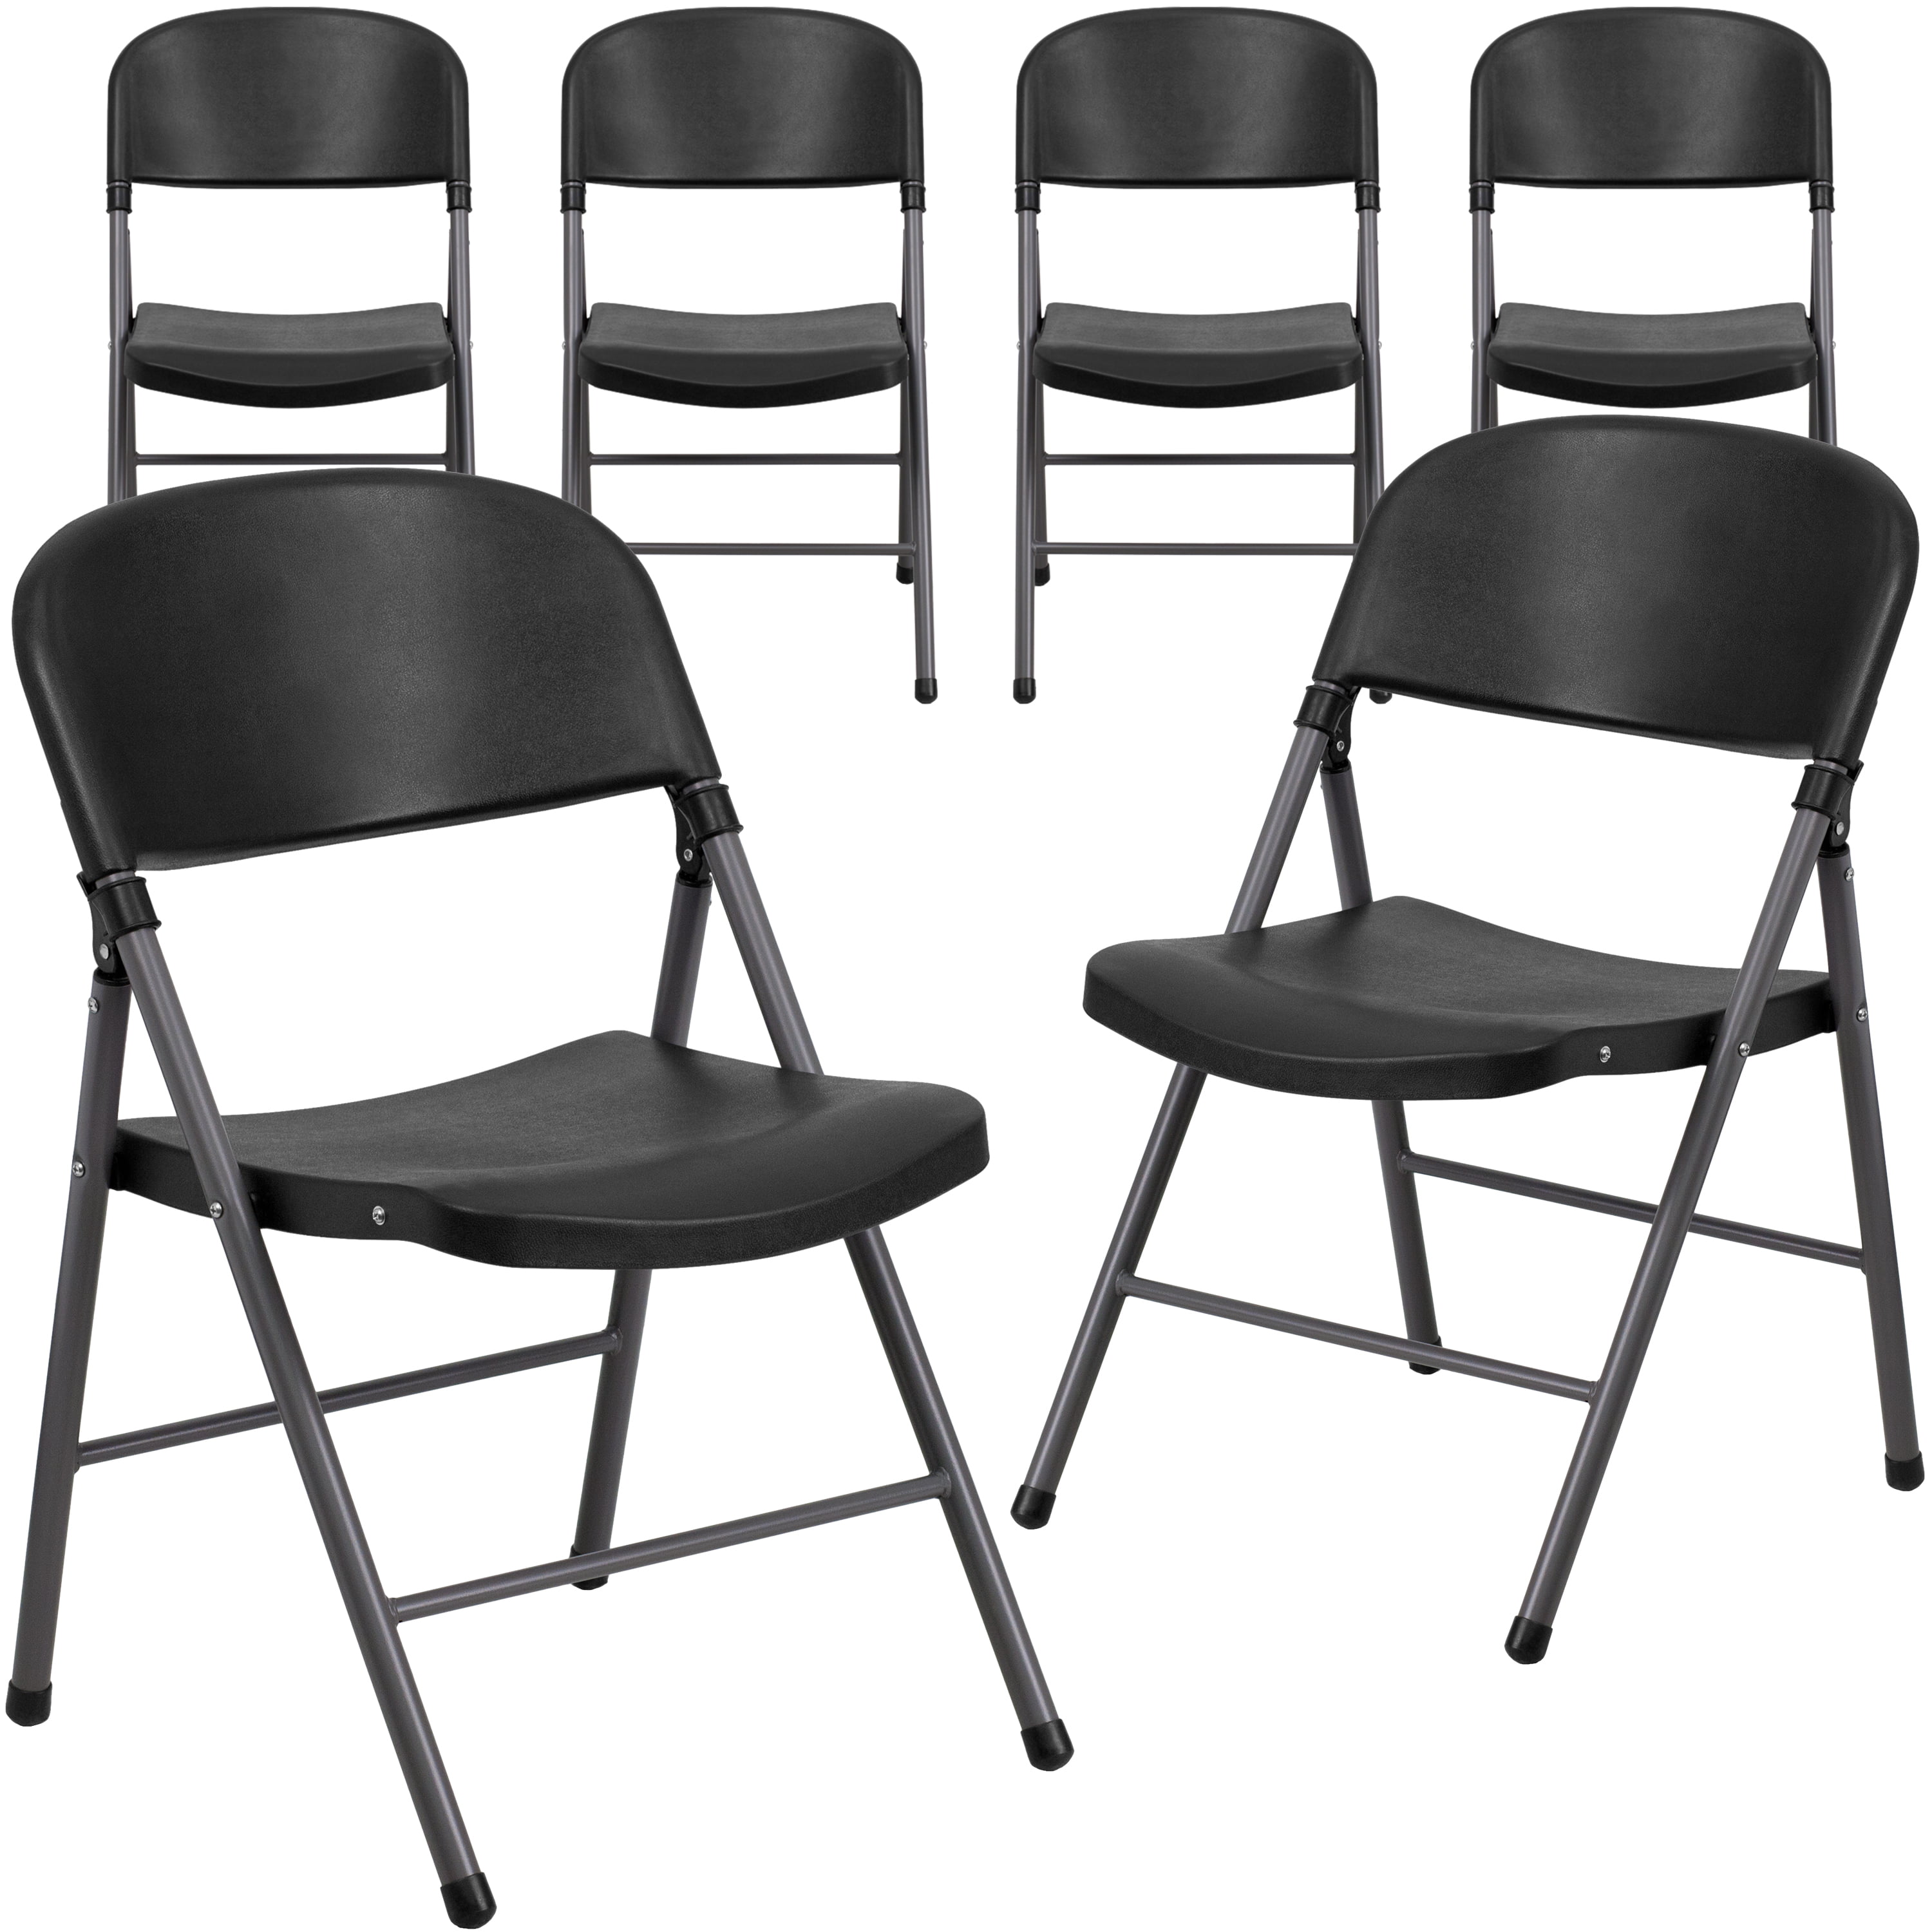 Black Plastic Folding Chair, Set of 6 - Walmart.com - Walmart.com